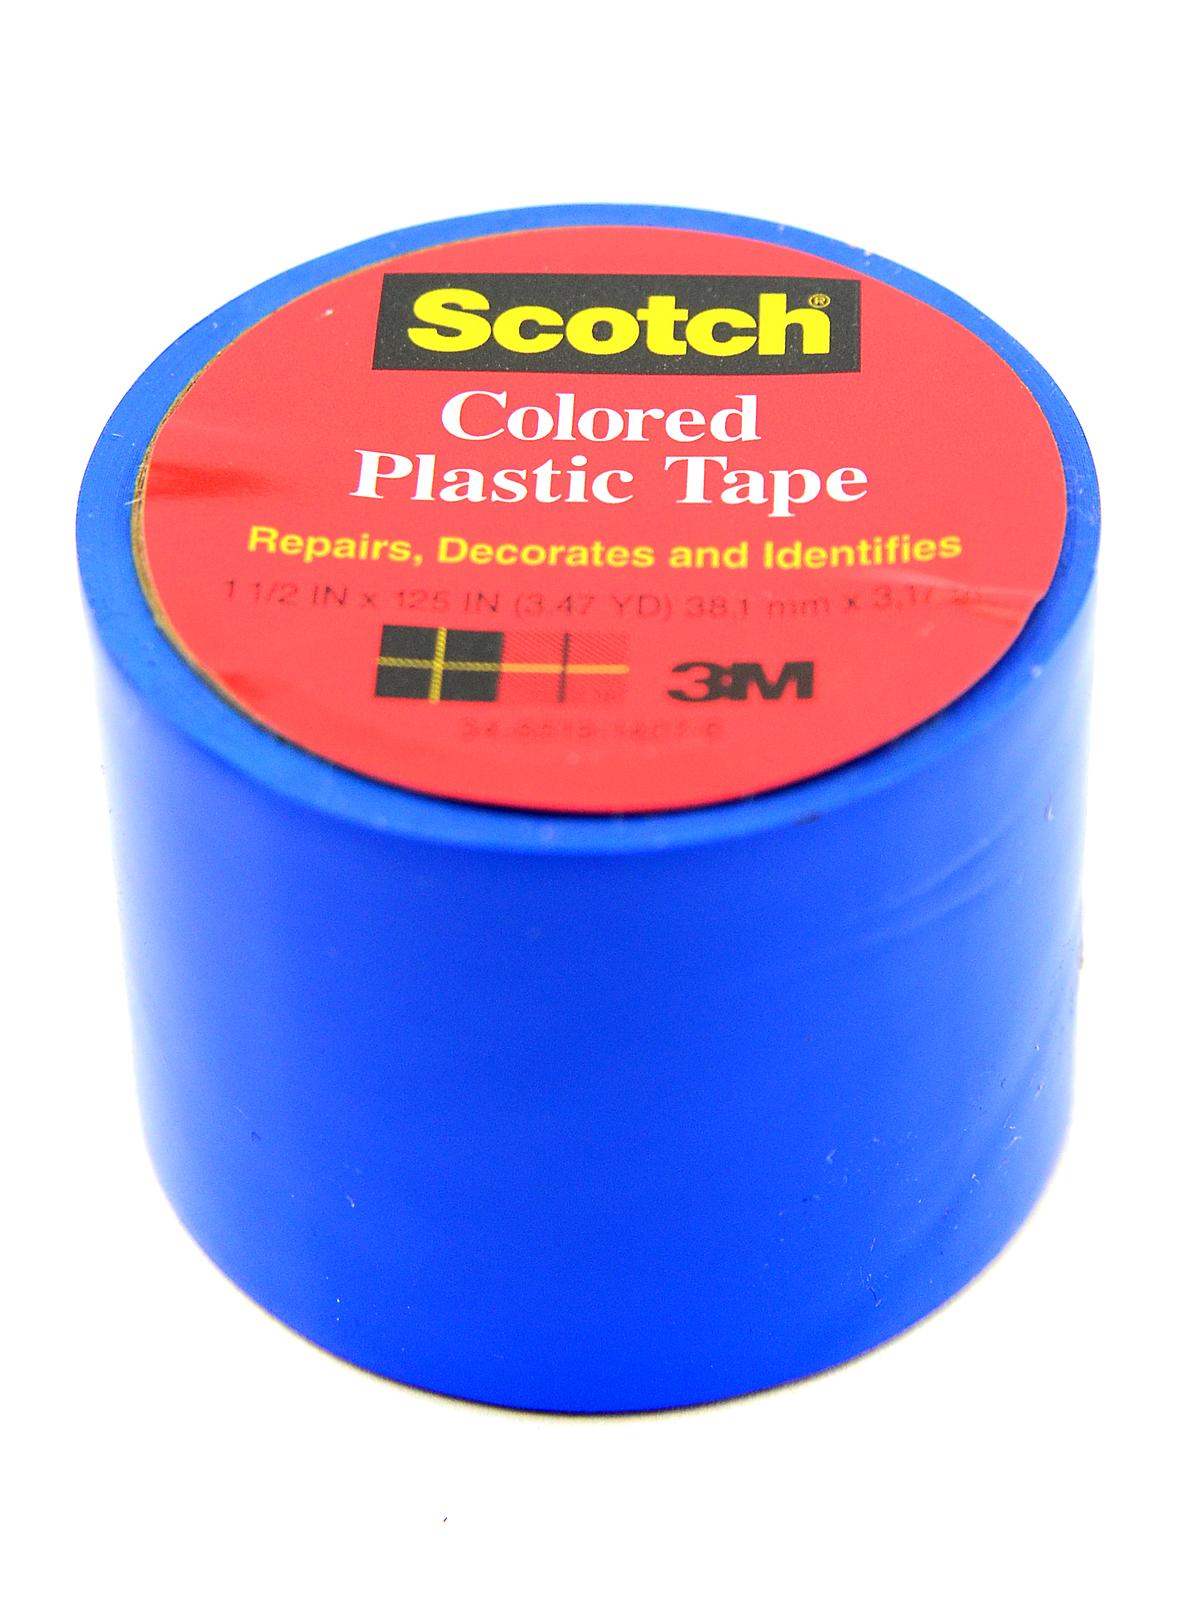 Colored Plastic Tape Blue 1 1 2 In.